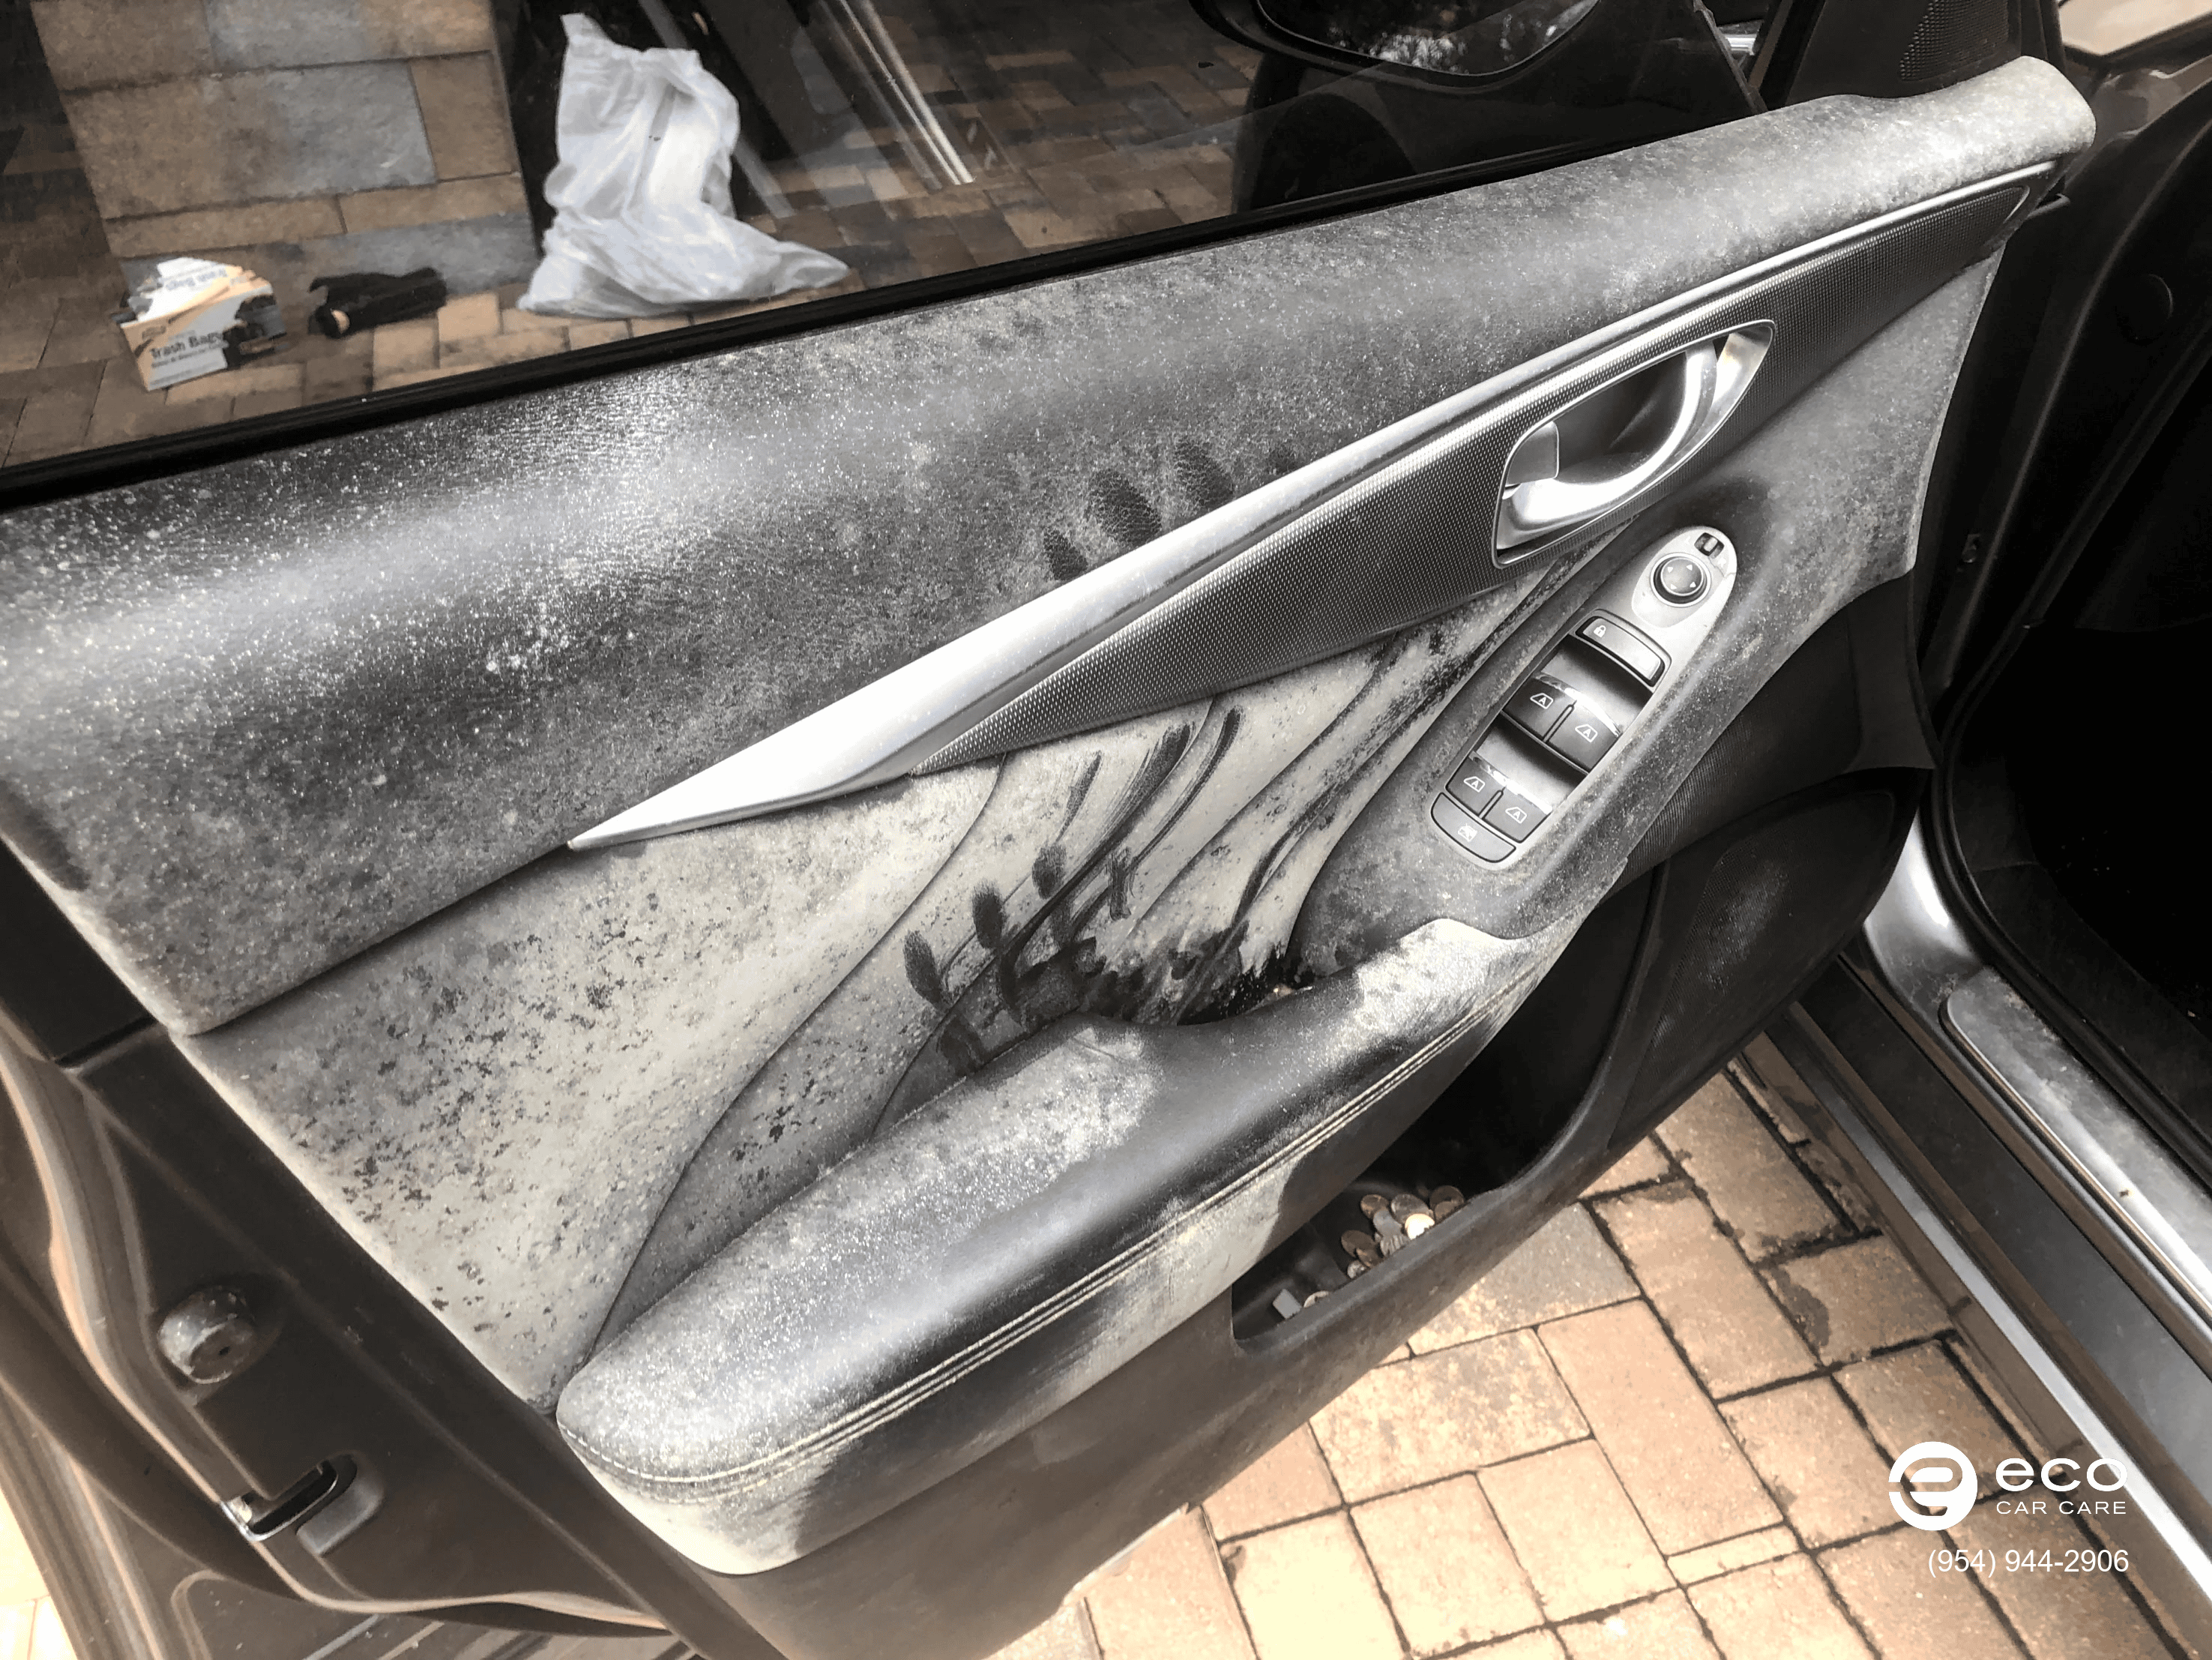 car mold removal mild